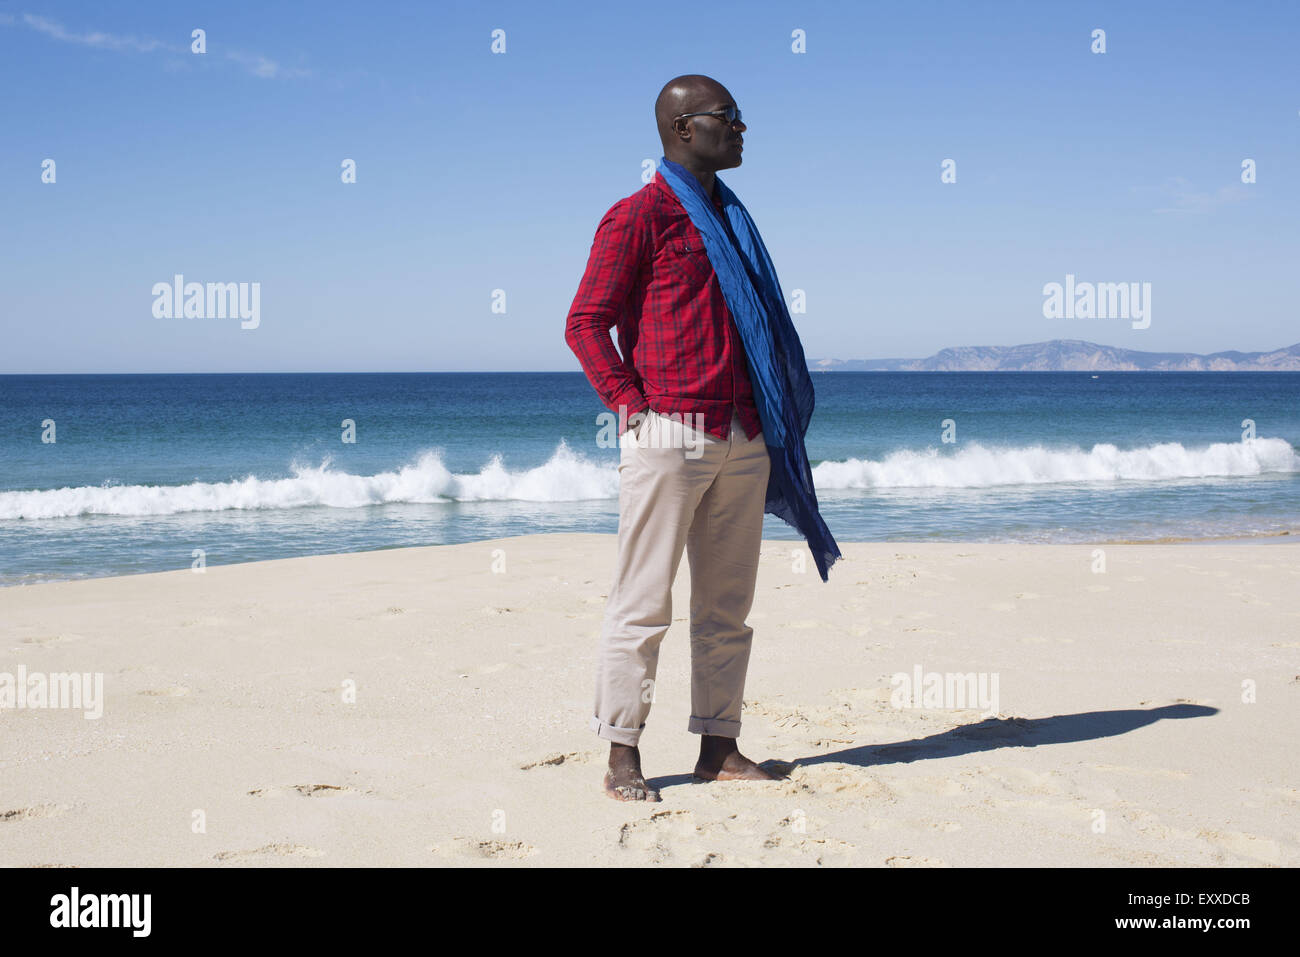 Man standing alone on beach Stock Photo